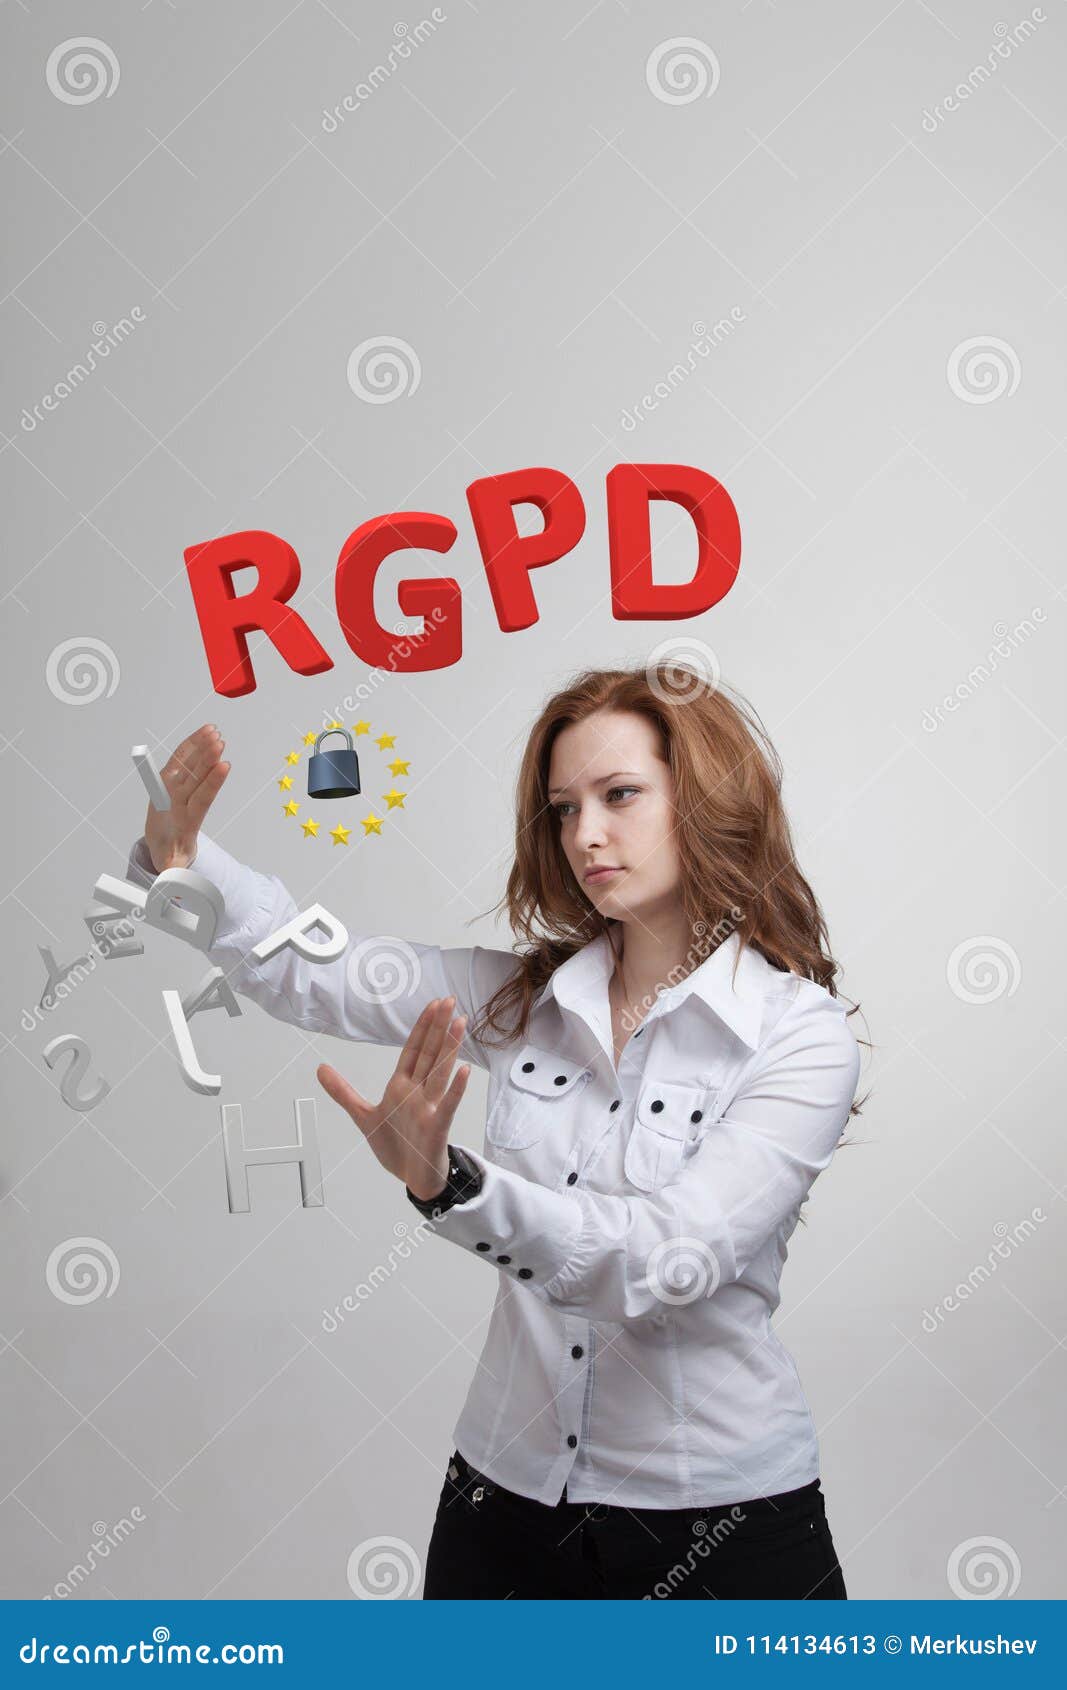 rgpd, spanish, french and italian version version of gdpr: reglamento general de proteccion de datos. general data